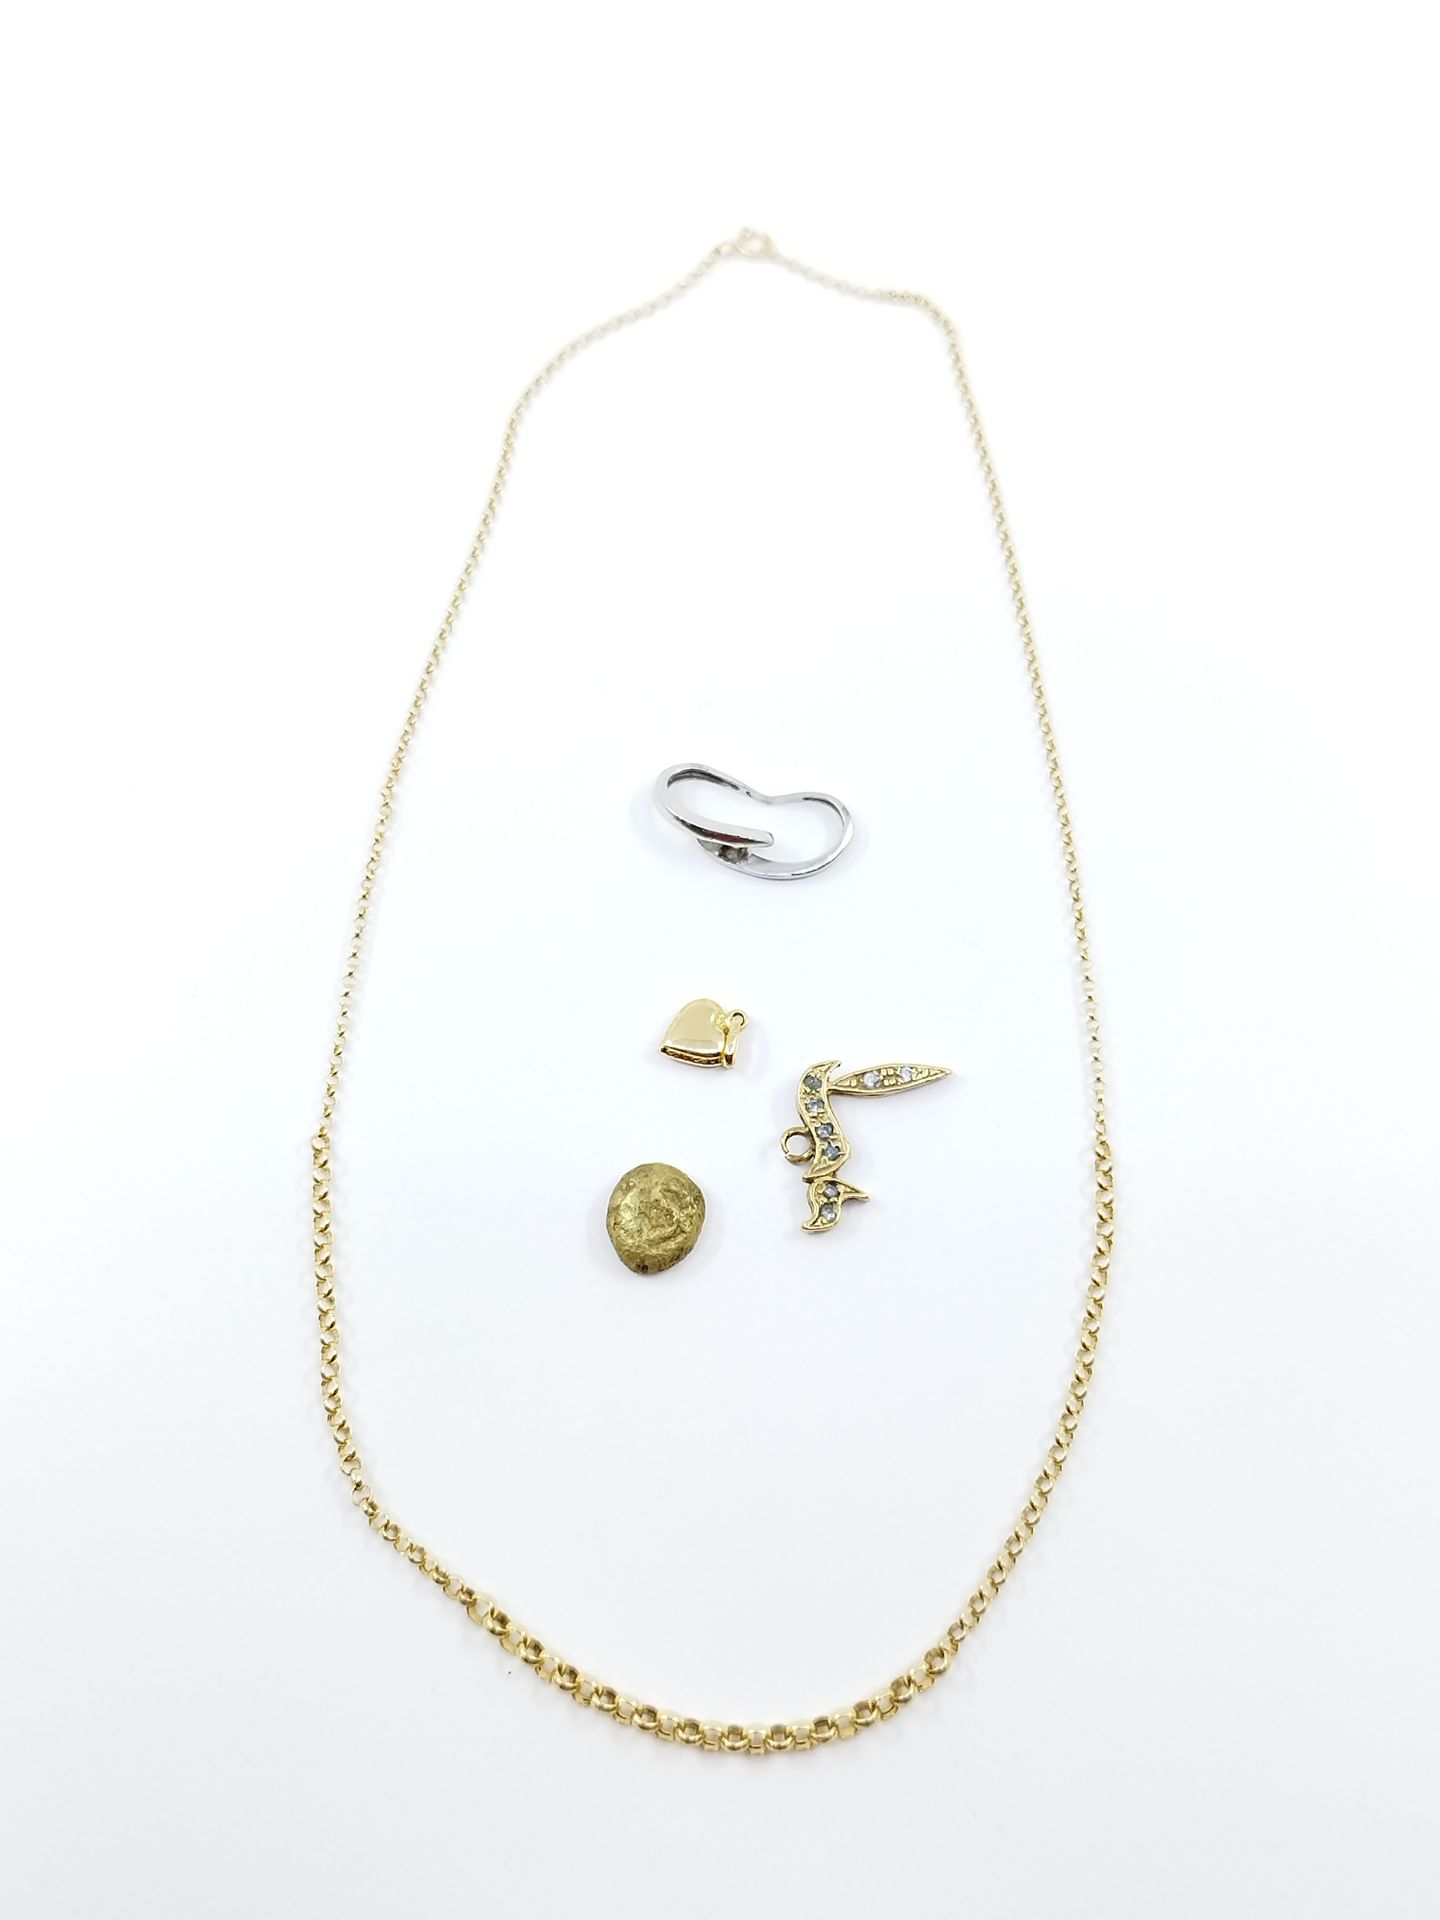 Null 地段包括 :

一条黄金链和一个黄金心形吊坠

一枚750°的黄金佩饰、一枚白金戒指和一枚黄金和白色宝石吊坠

毛重：7,86克